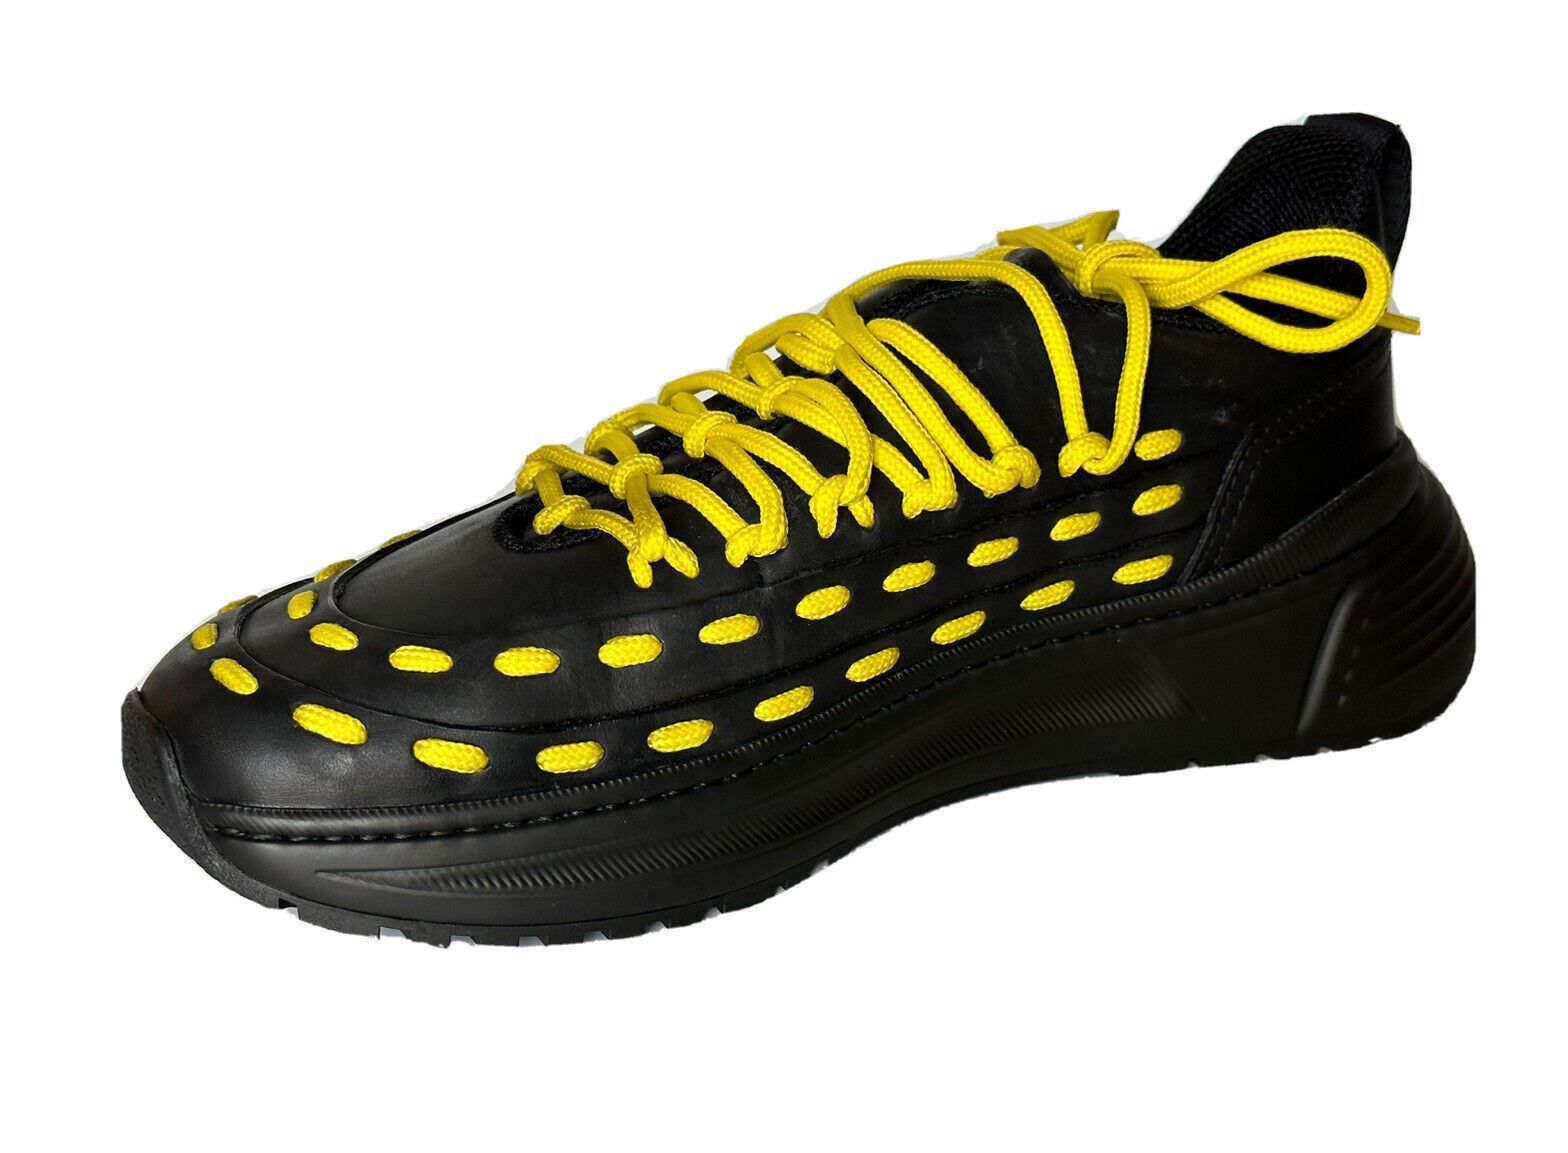 NIB $950 Bottega Veneta Mens Leather Black/Yellow Sneakers 7 US 578305 1013